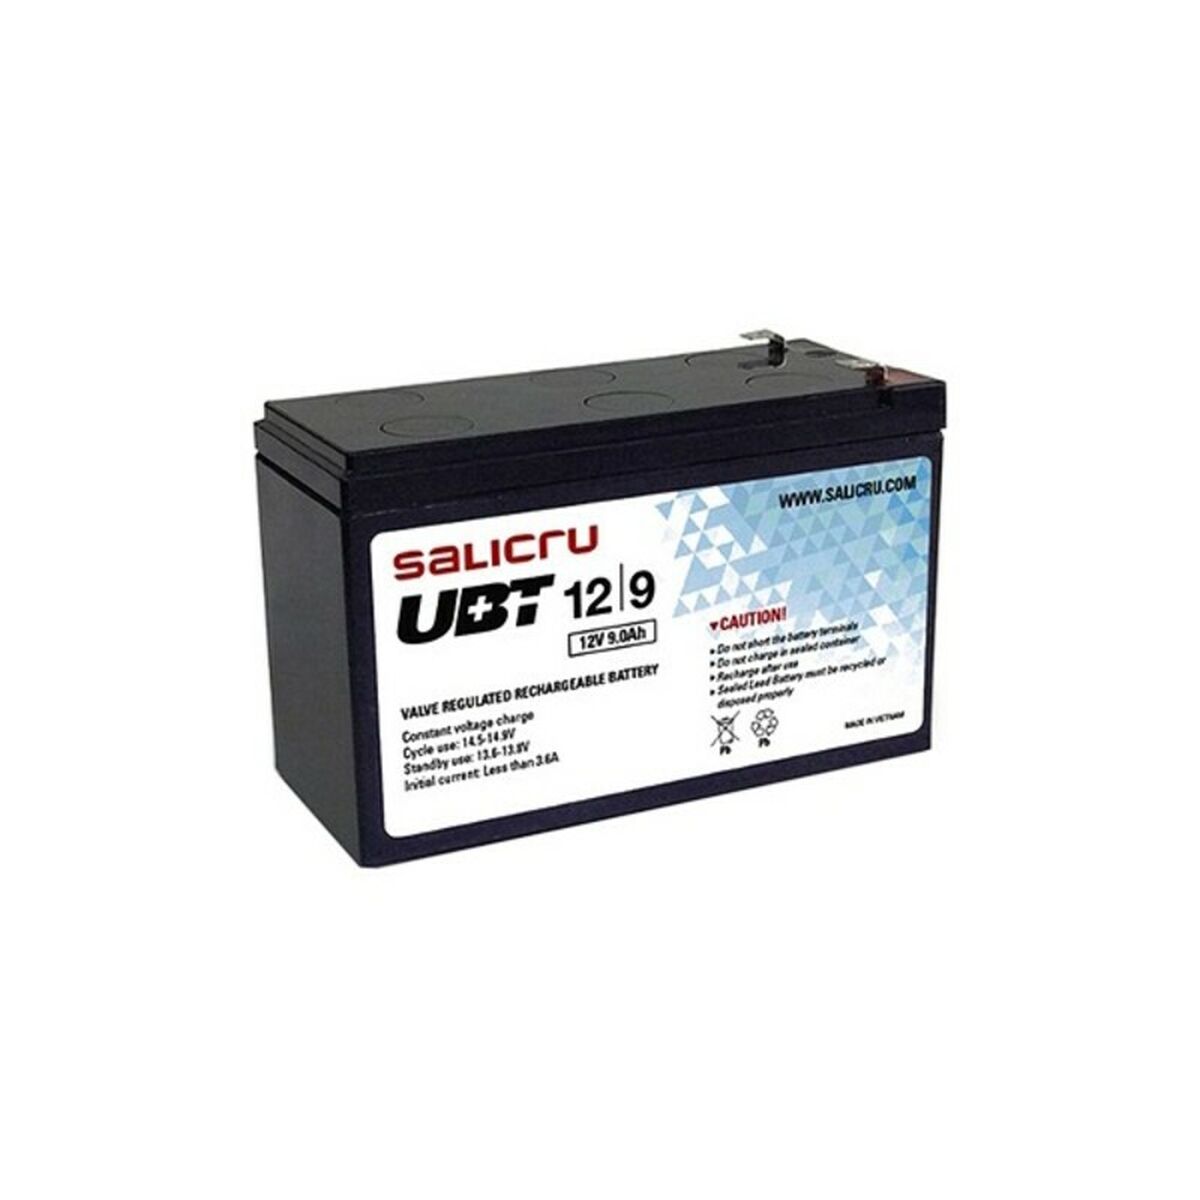 Batterie pour Système d'Alimentation Sans Interruption Salicru UBT 12/9 9 Ah 12V